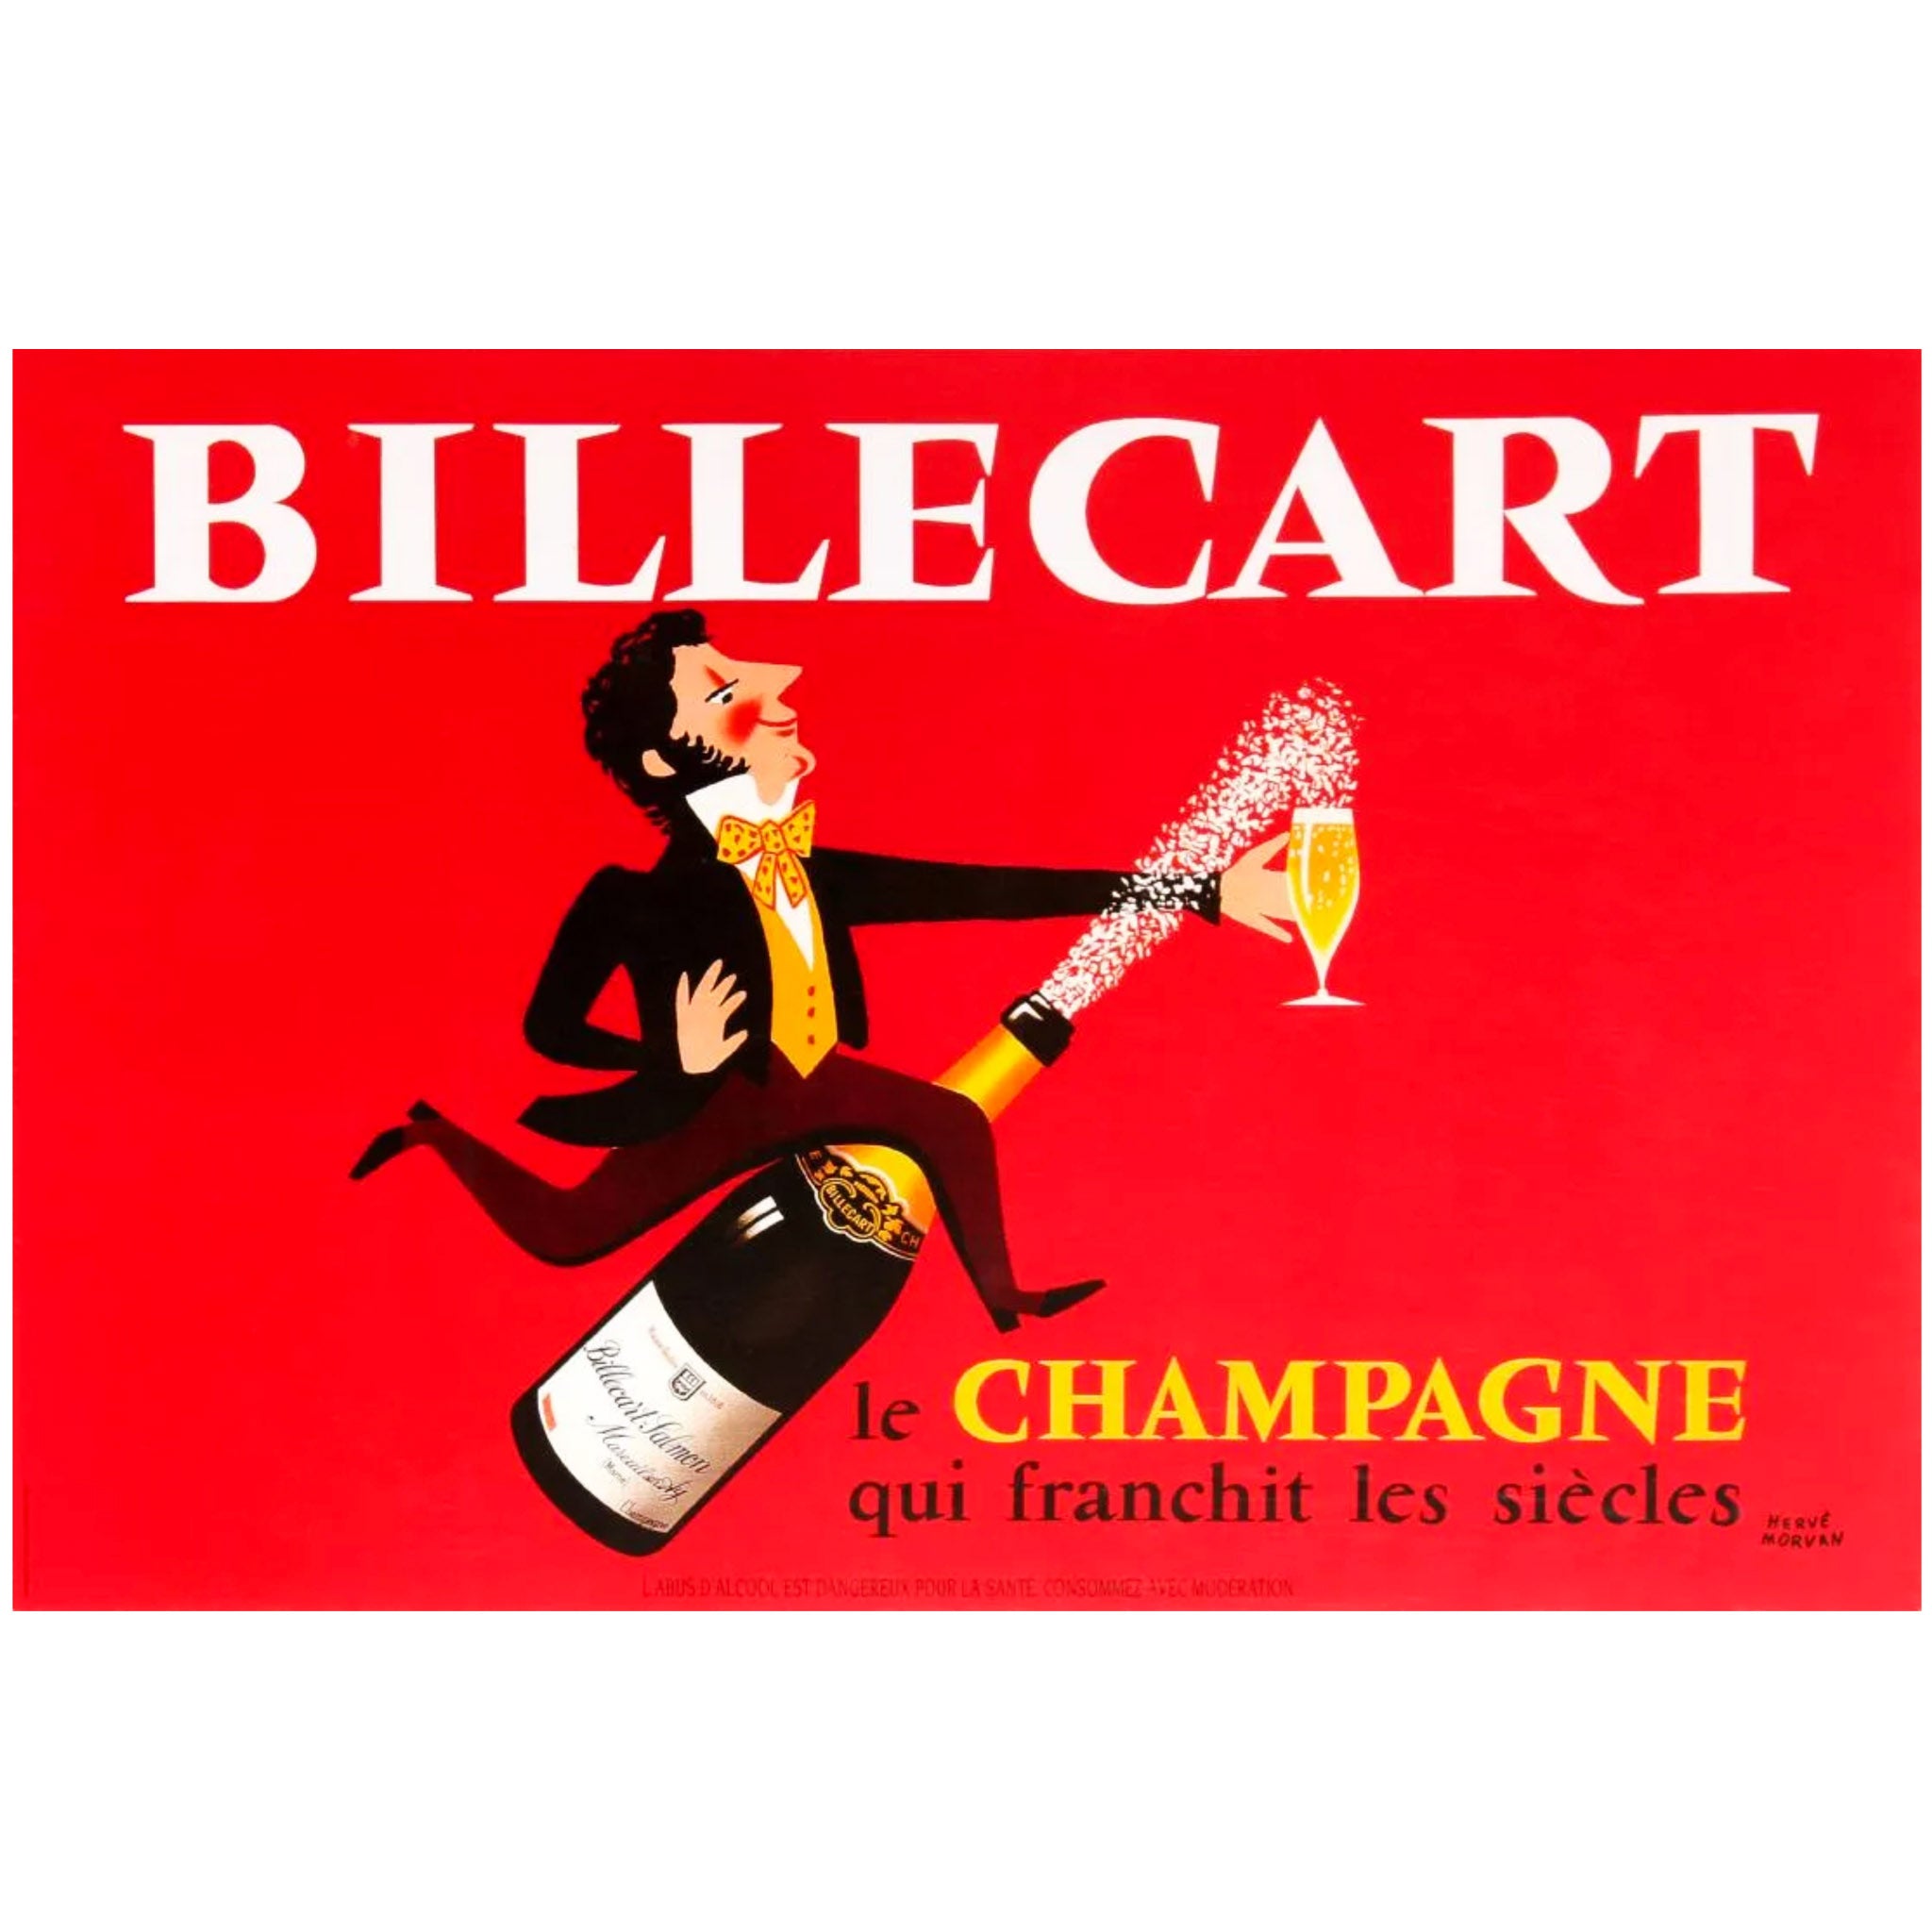 Billecart Champagne Advertising Poster